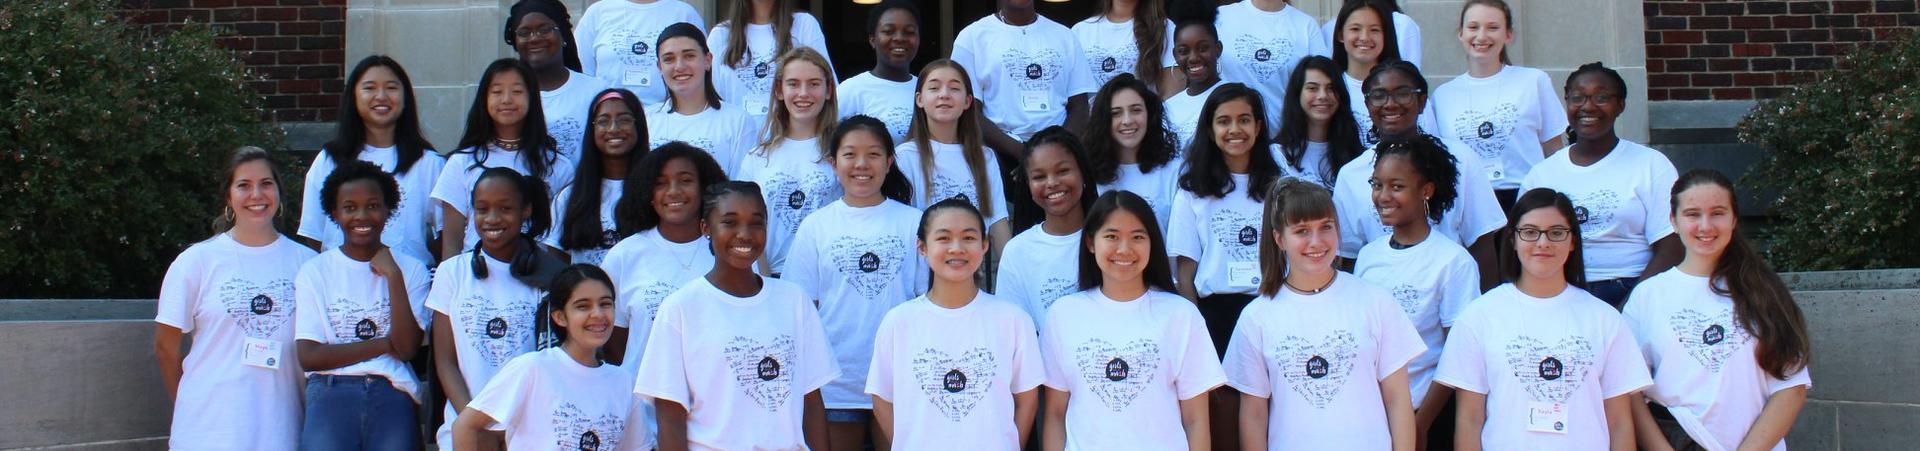 Group shot of Girls Talk Math 2020 campers